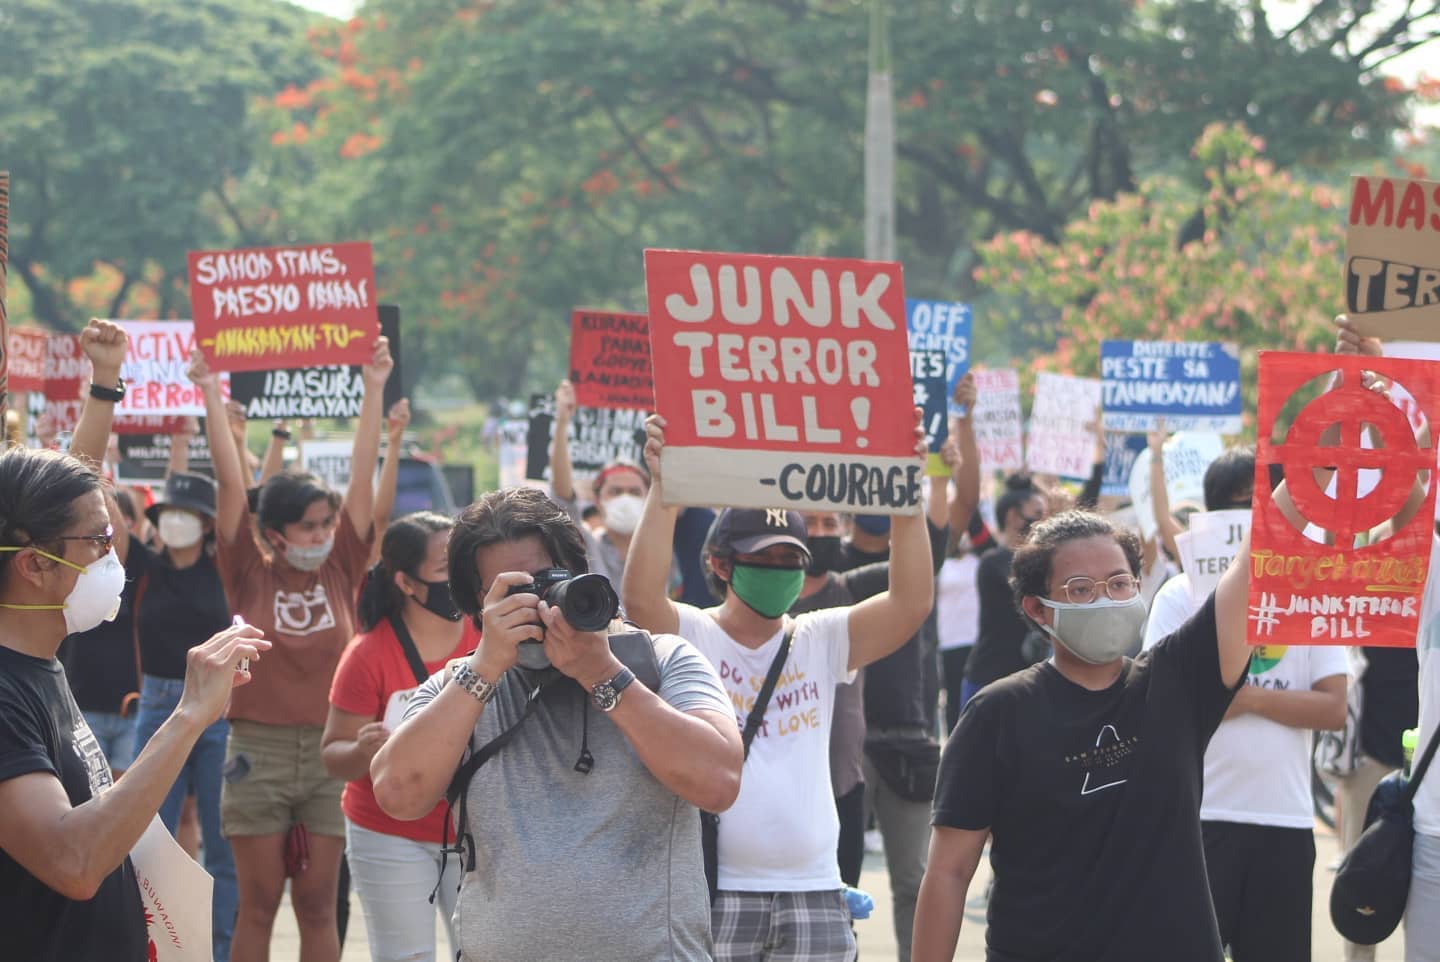 Groups protest Anti-Terror Bill passage at UP rally despite quarantine